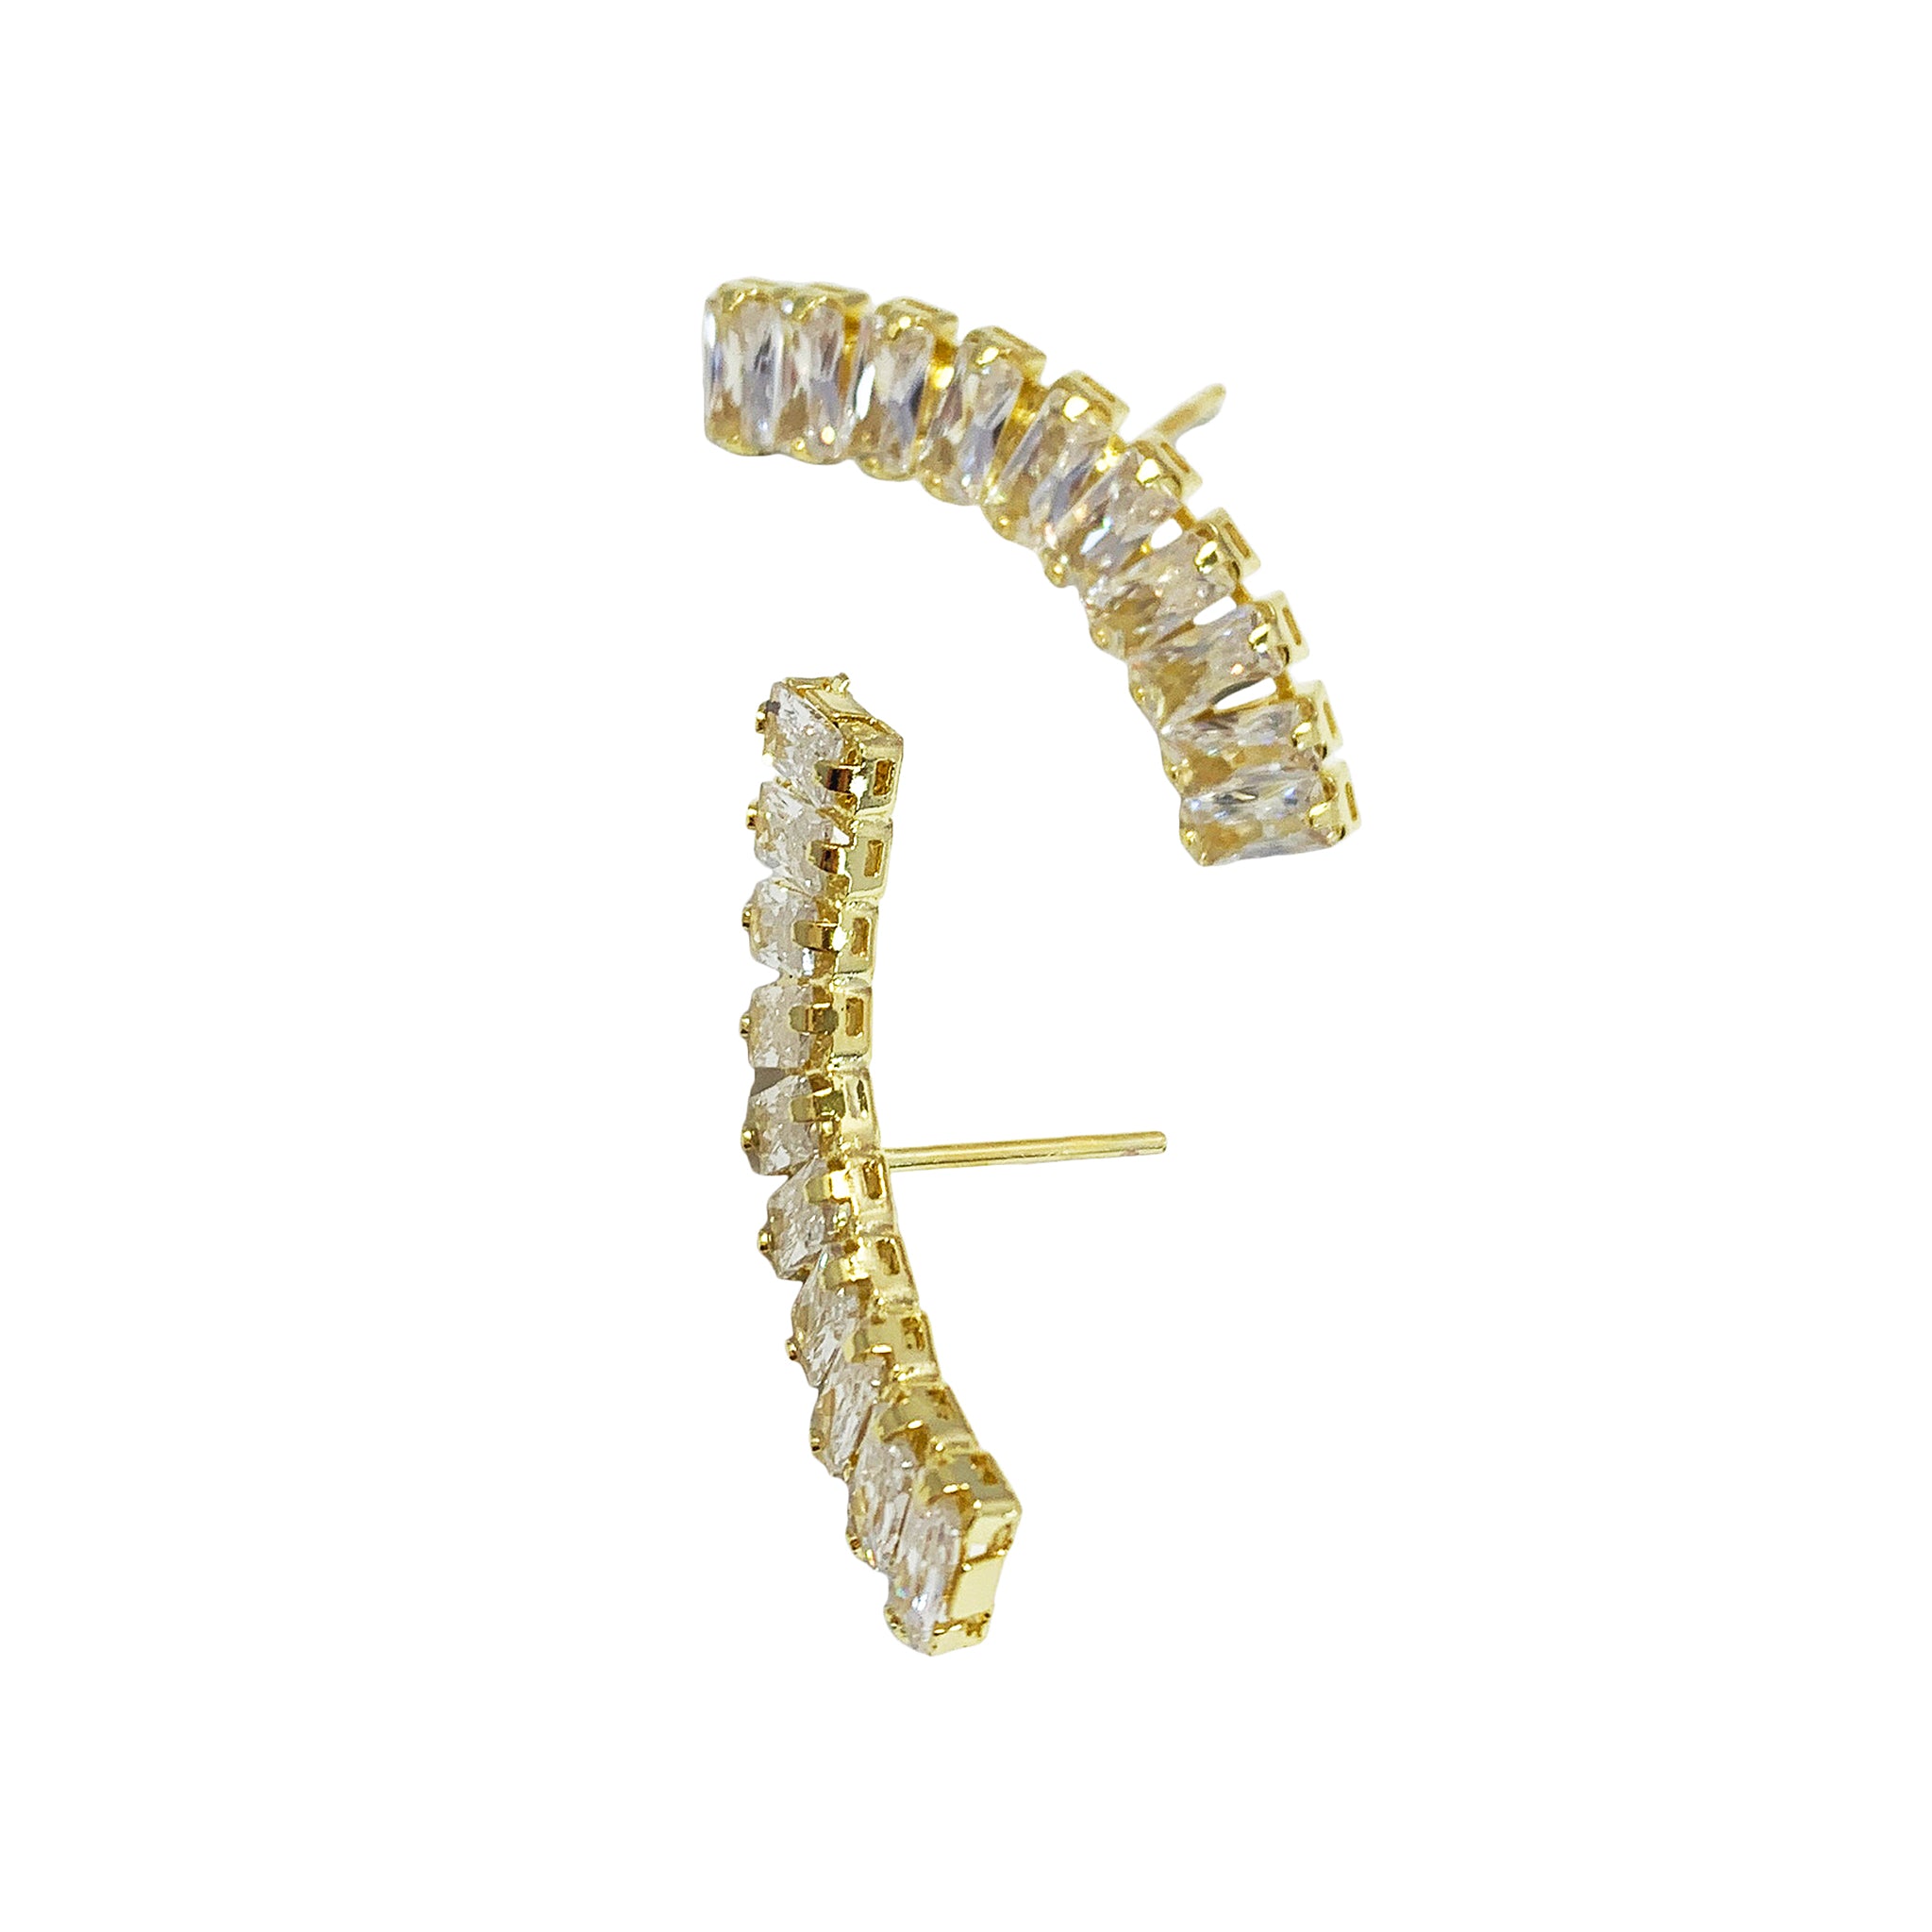 Sheila Fajl Bettina Ear Climber Stud Earrings in Cubic Zirconia Crystal and Gold